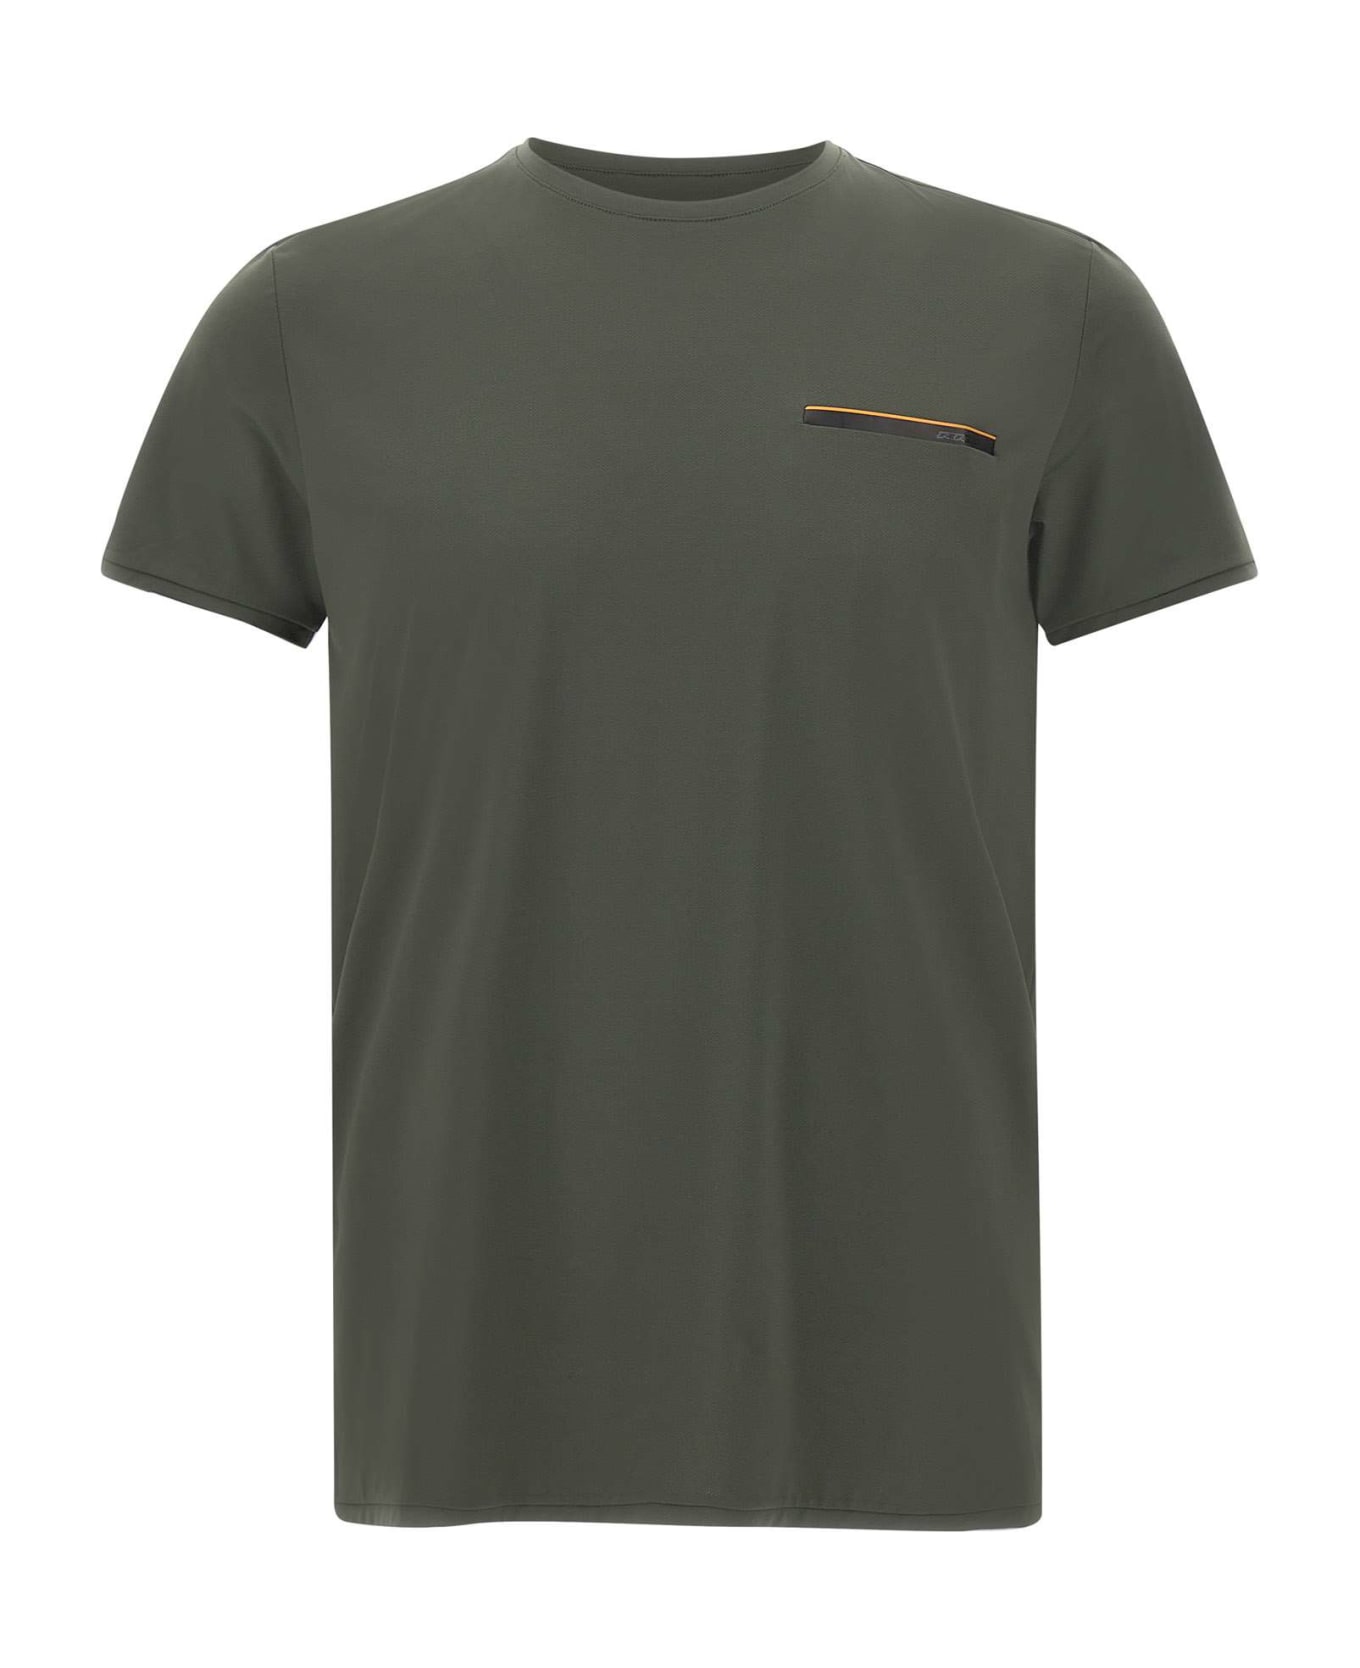 RRD - Roberto Ricci Design "oxford Pocket Shirty" T-shirt - GREEN